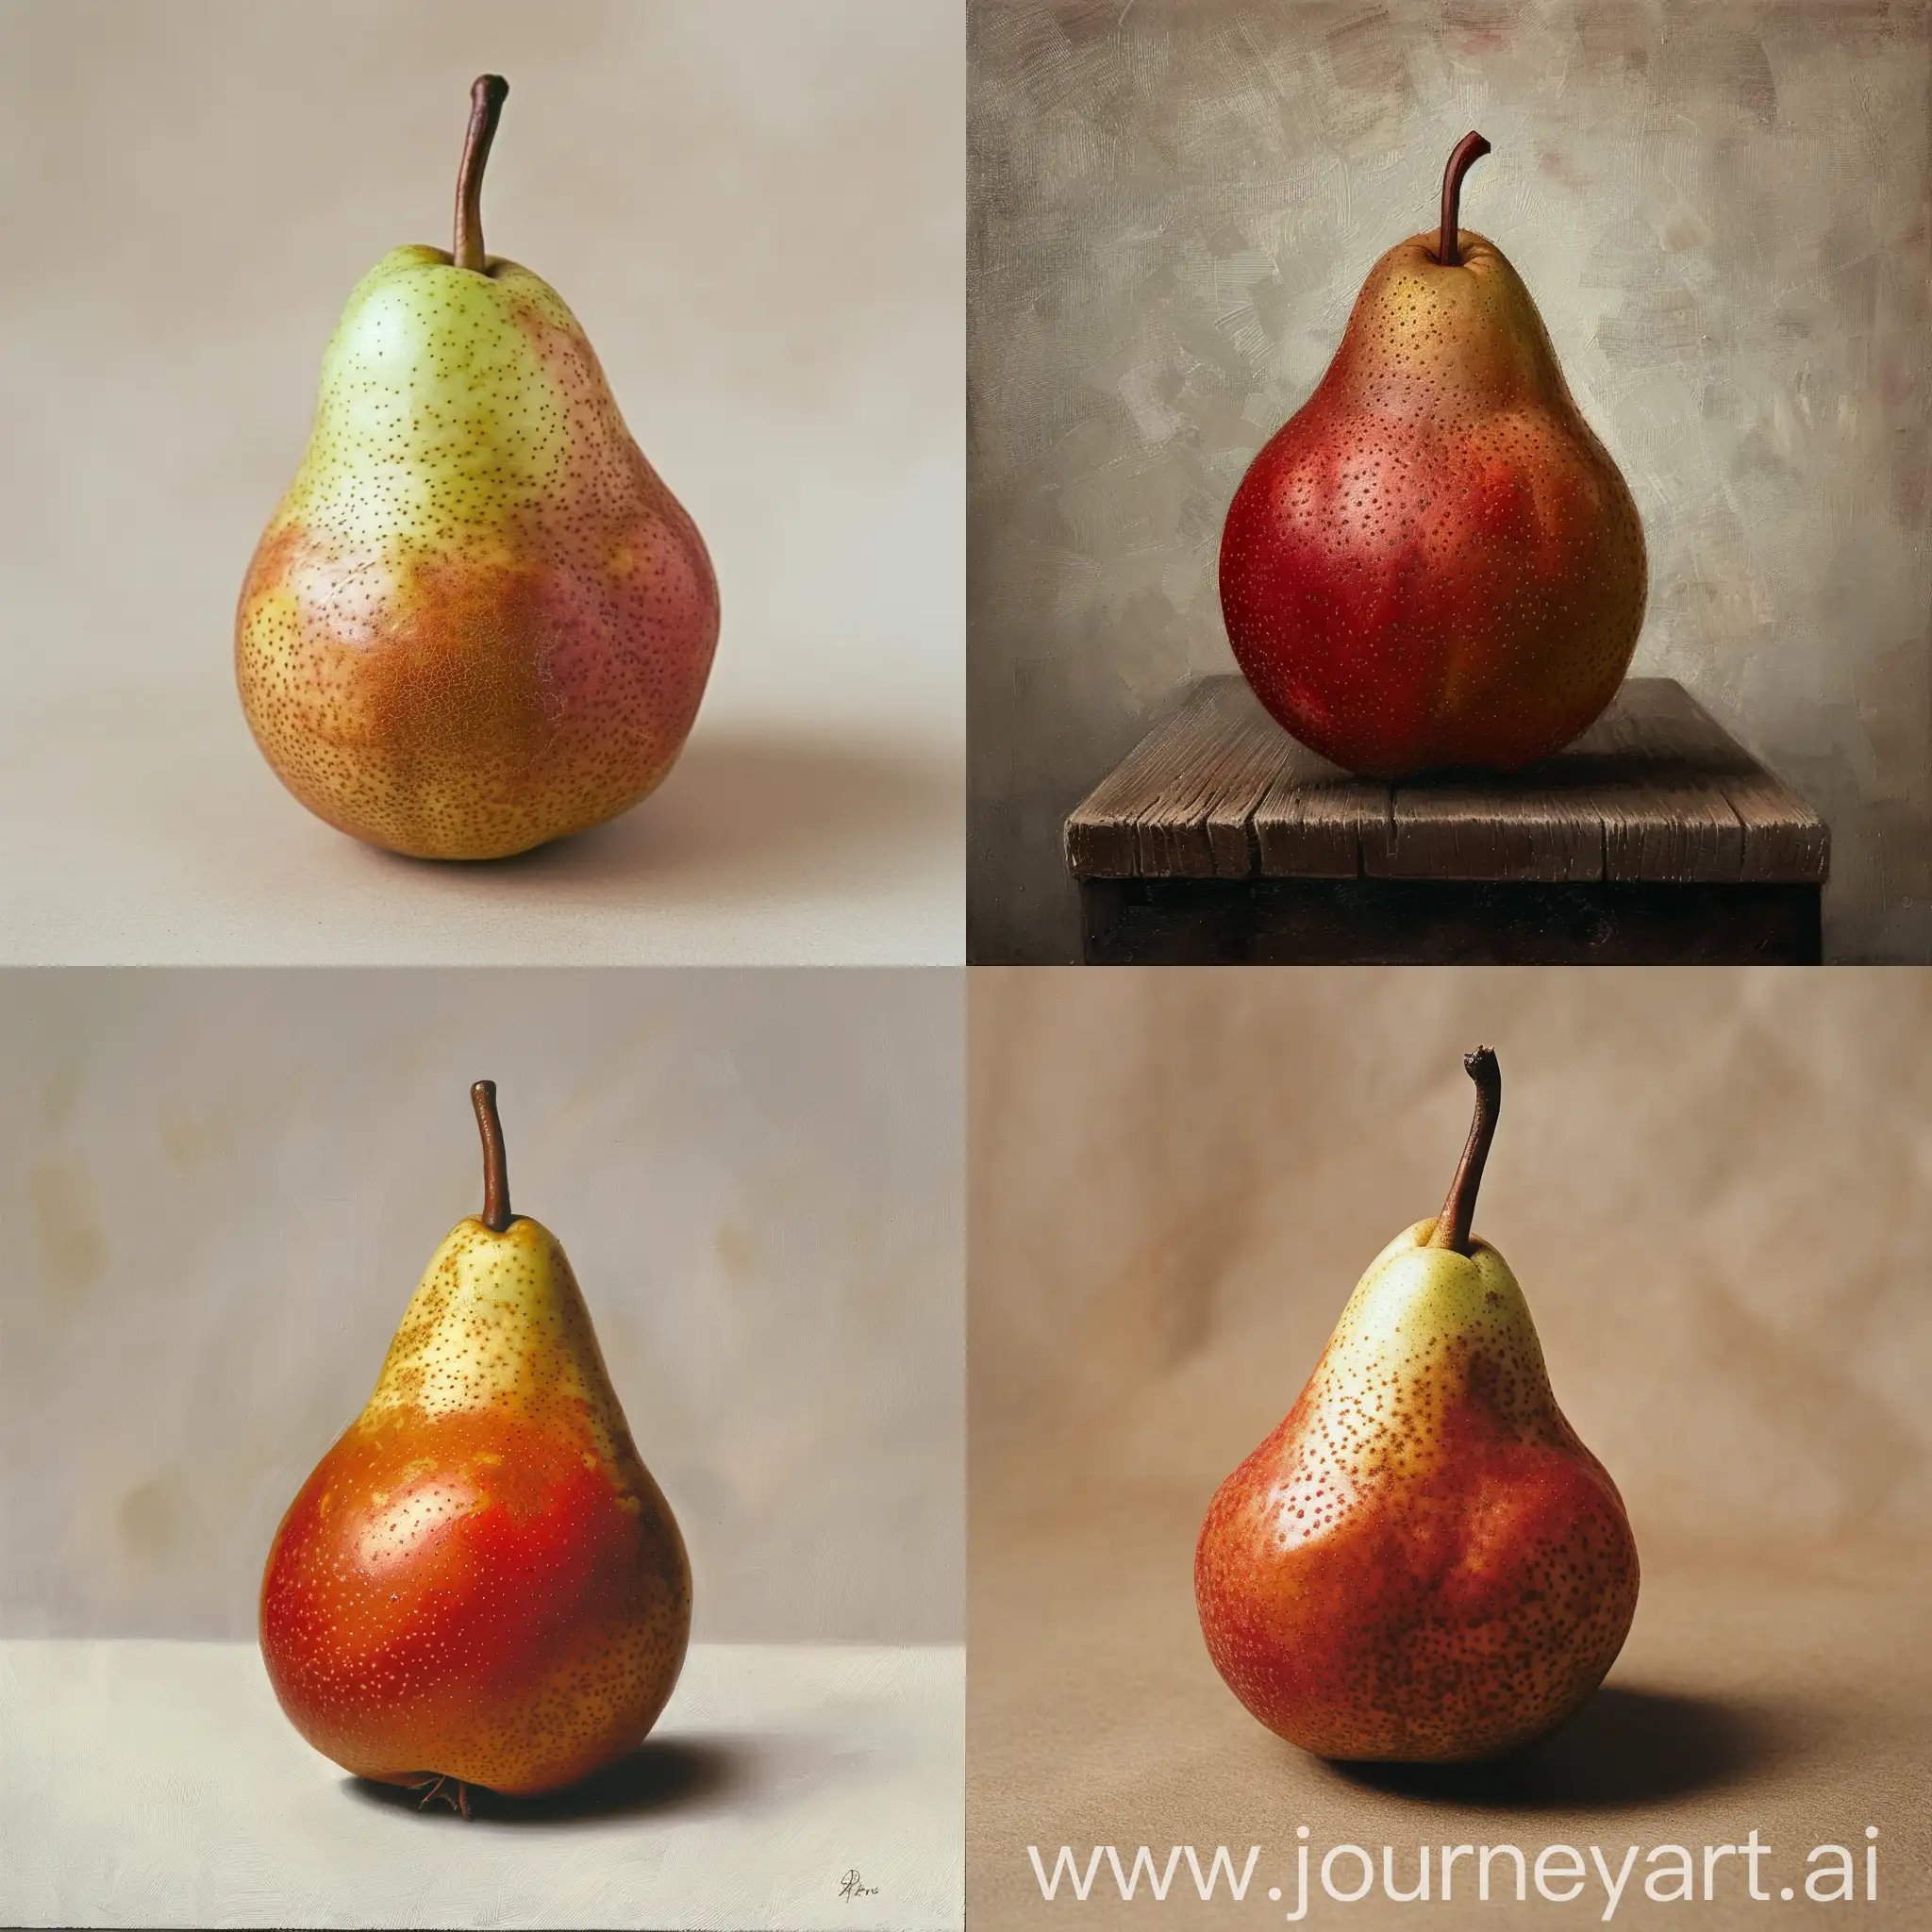 Juicy-Pear-in-Apples-Clothing-Vibrant-Fruit-Art